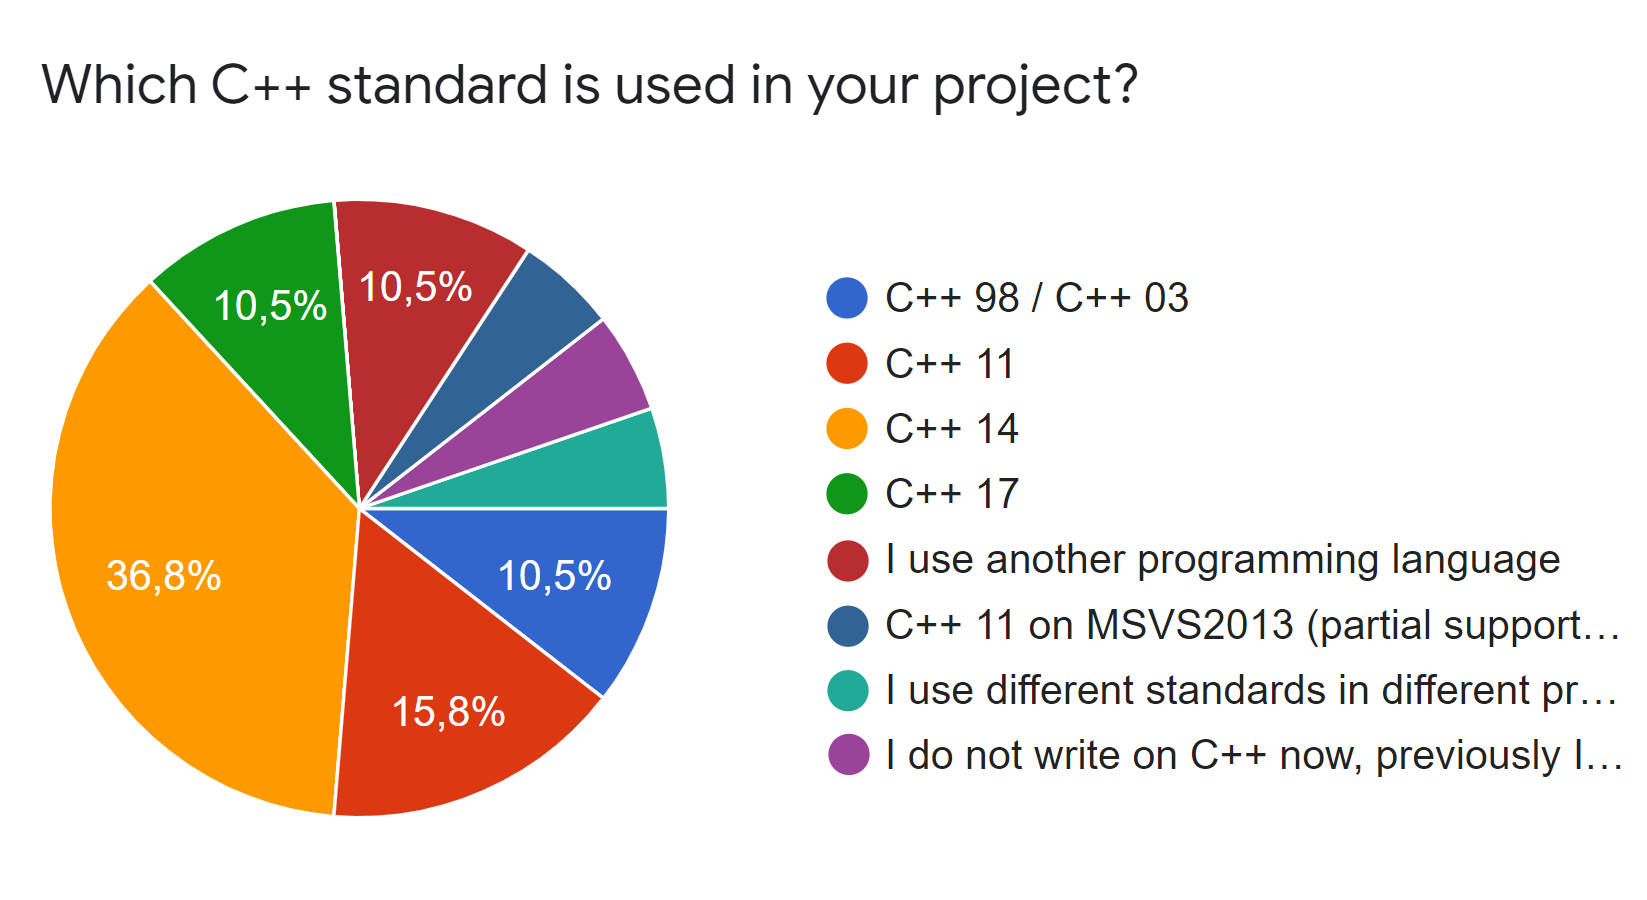 C++ standards we use